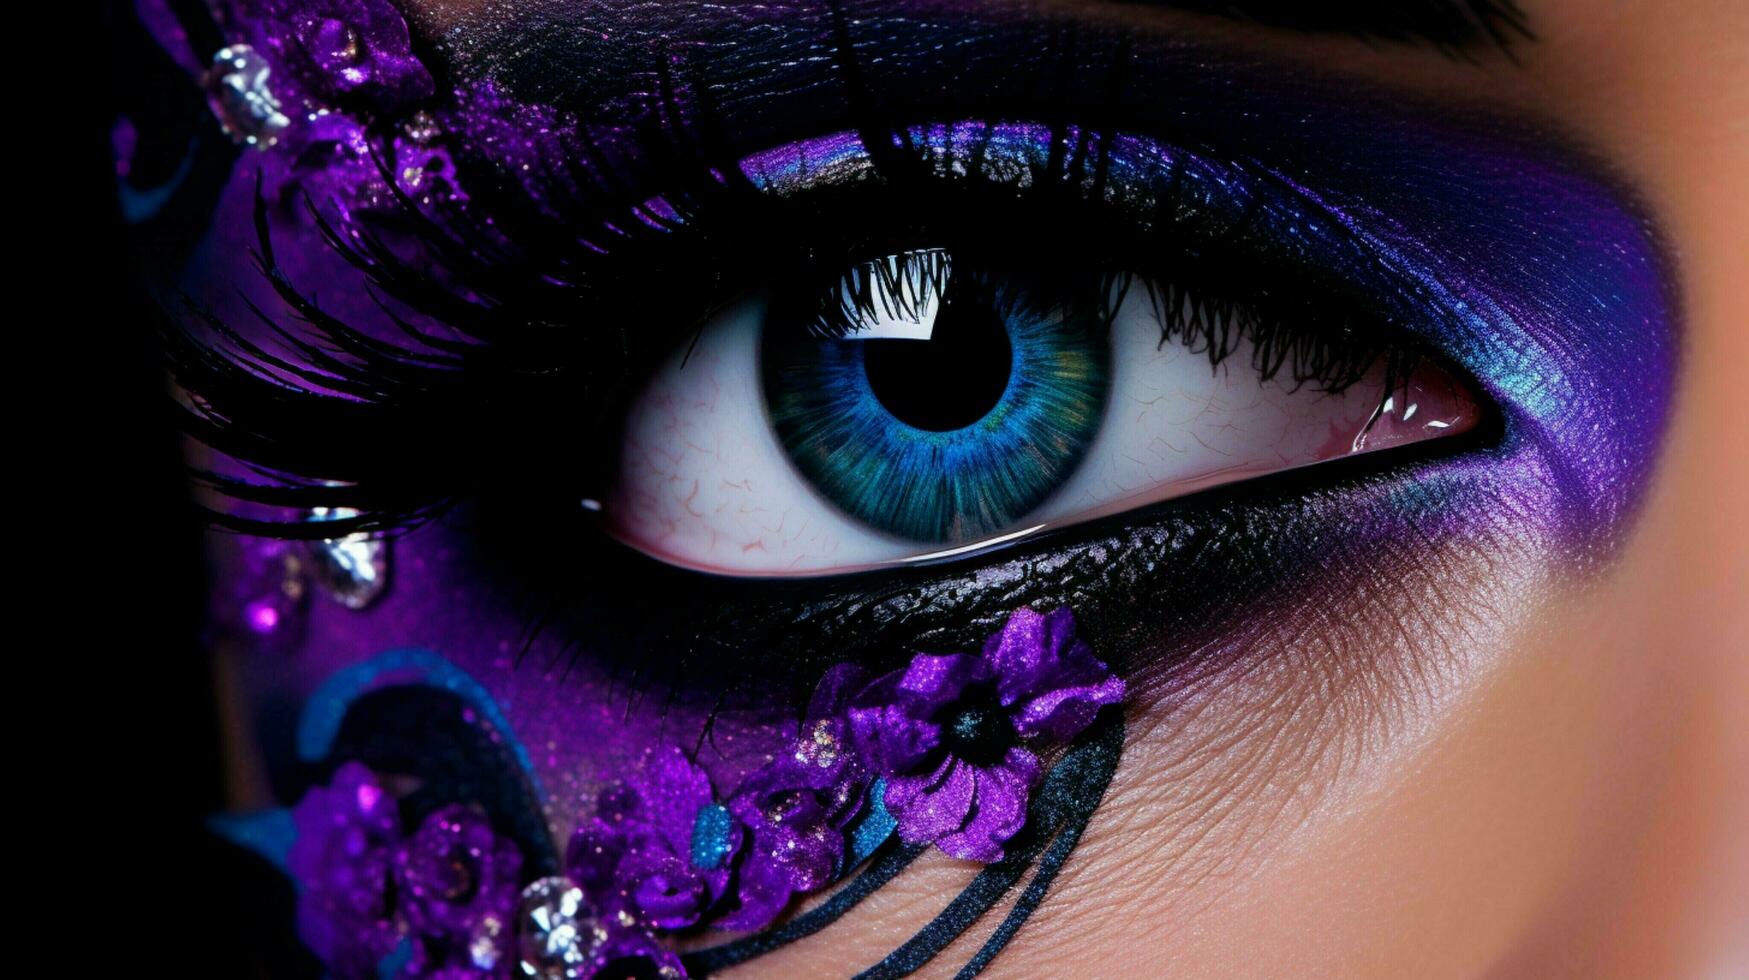 bellezza occhio dipinto viola vivace e elegante foto